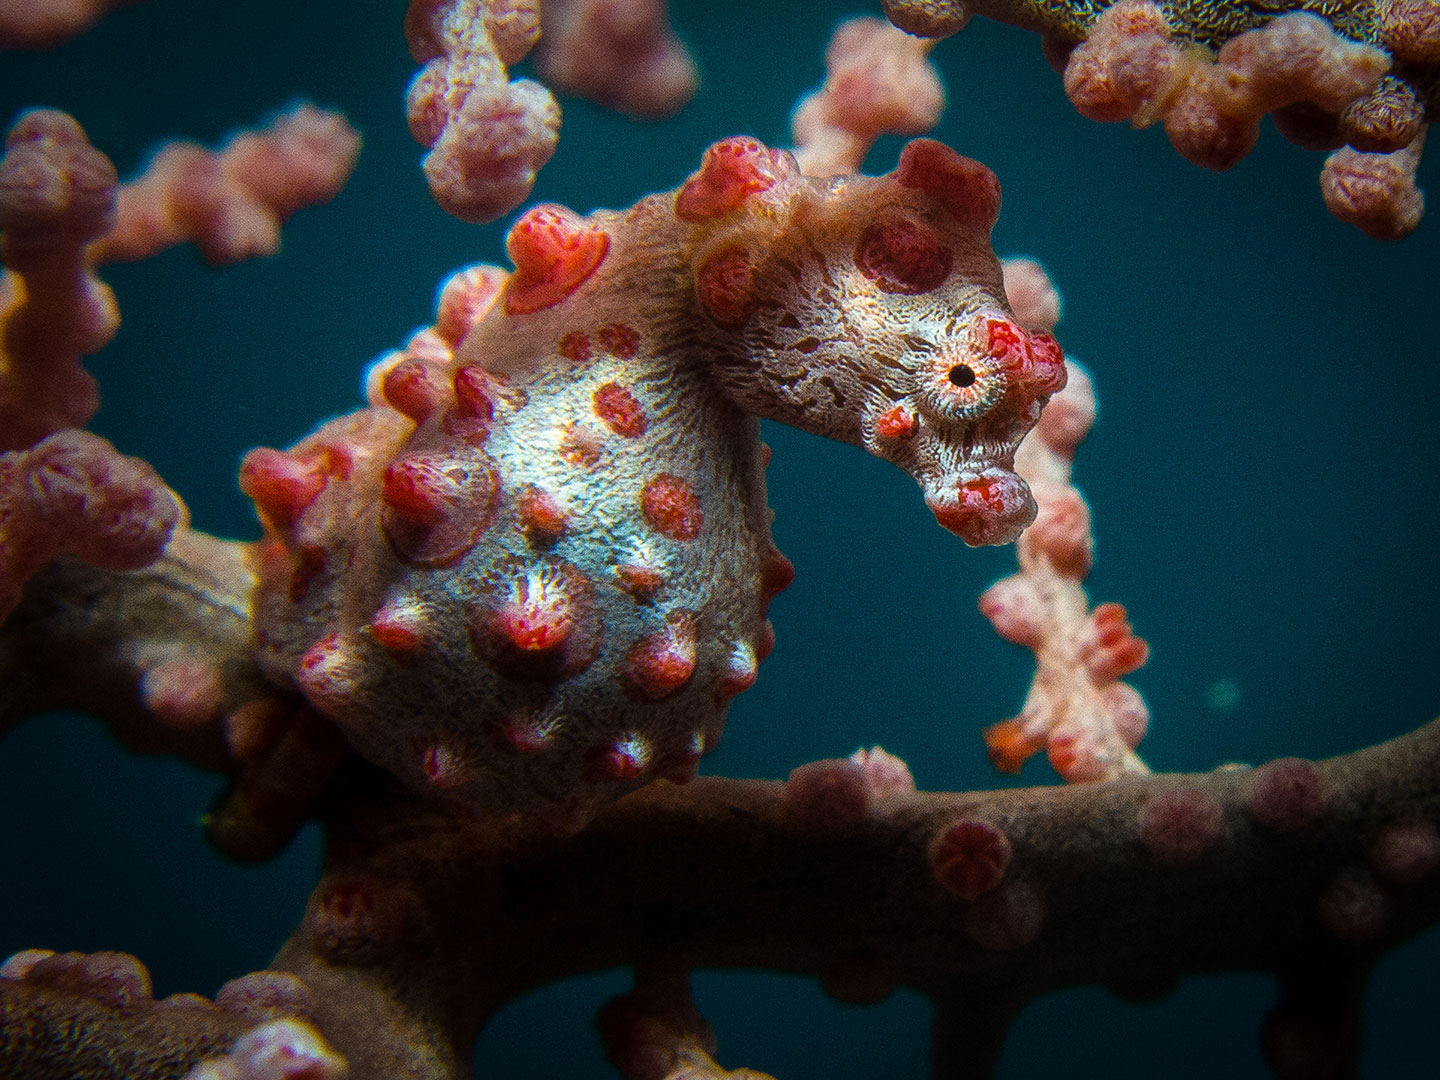 Un hippocampe pygmée via Shutterstock